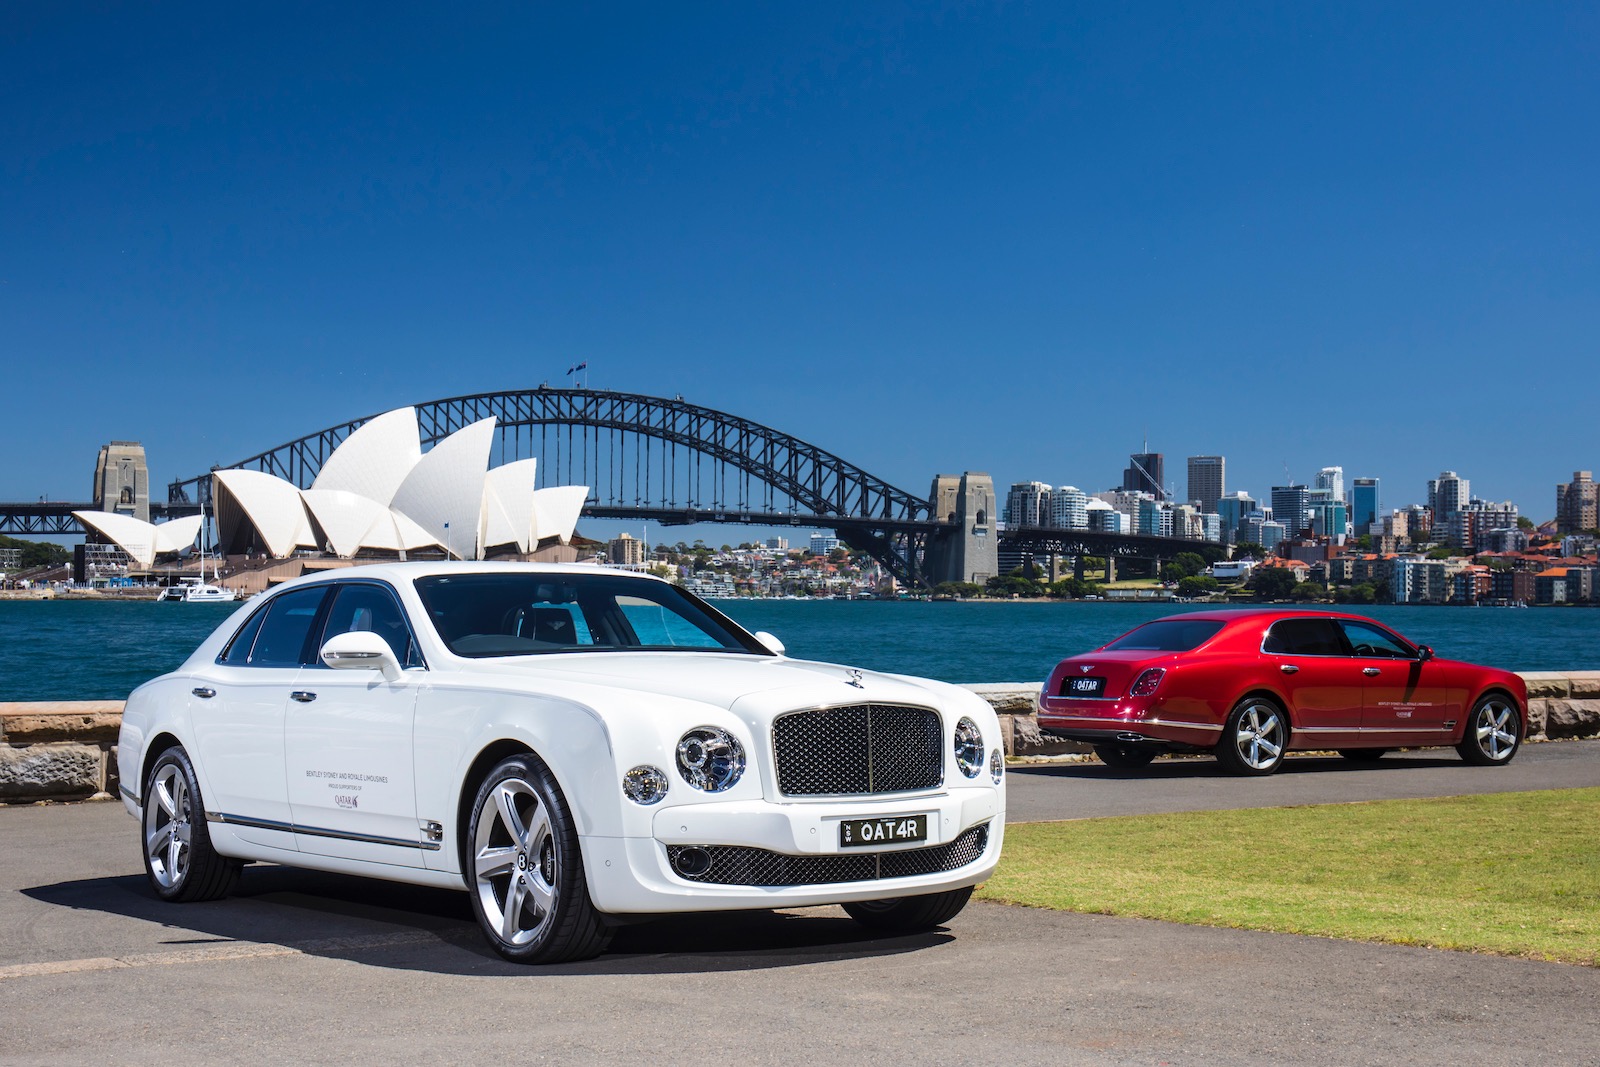 Bentley Mulsanne transport offered to Qatar A380 passengers in Sydney